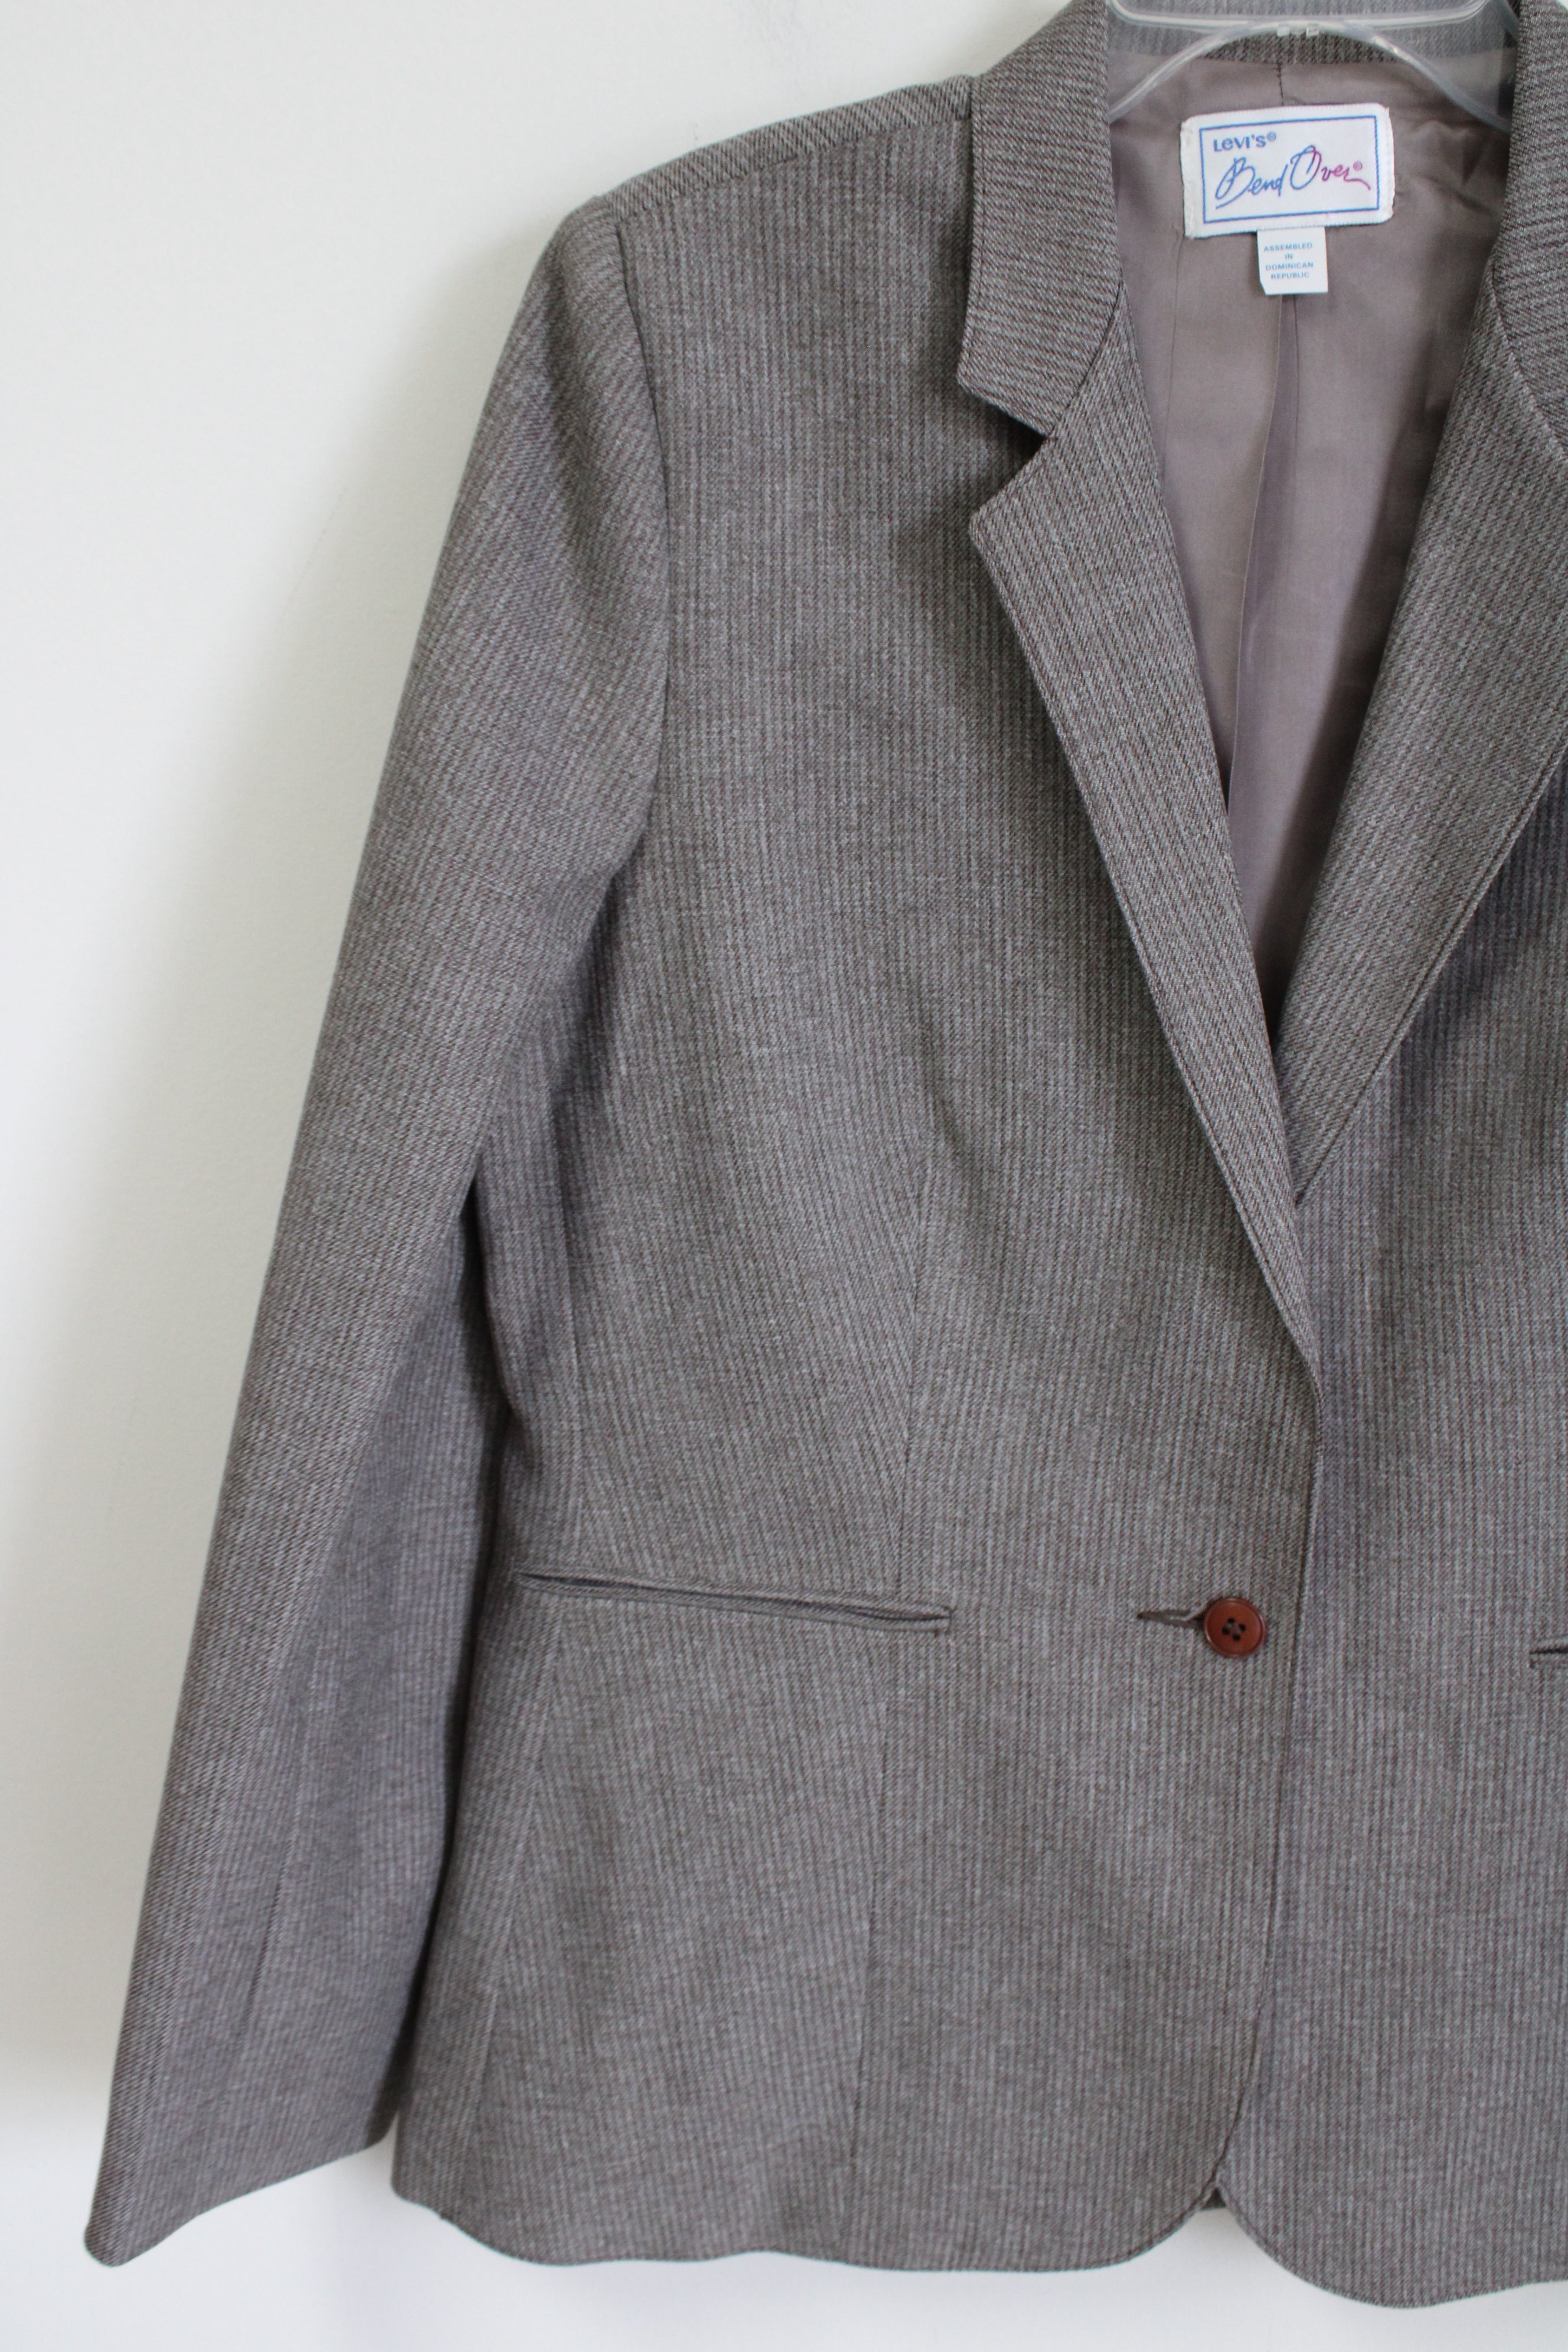 NEW Levi's Bendover Gray Brown Striped Vintage Blazer | 14